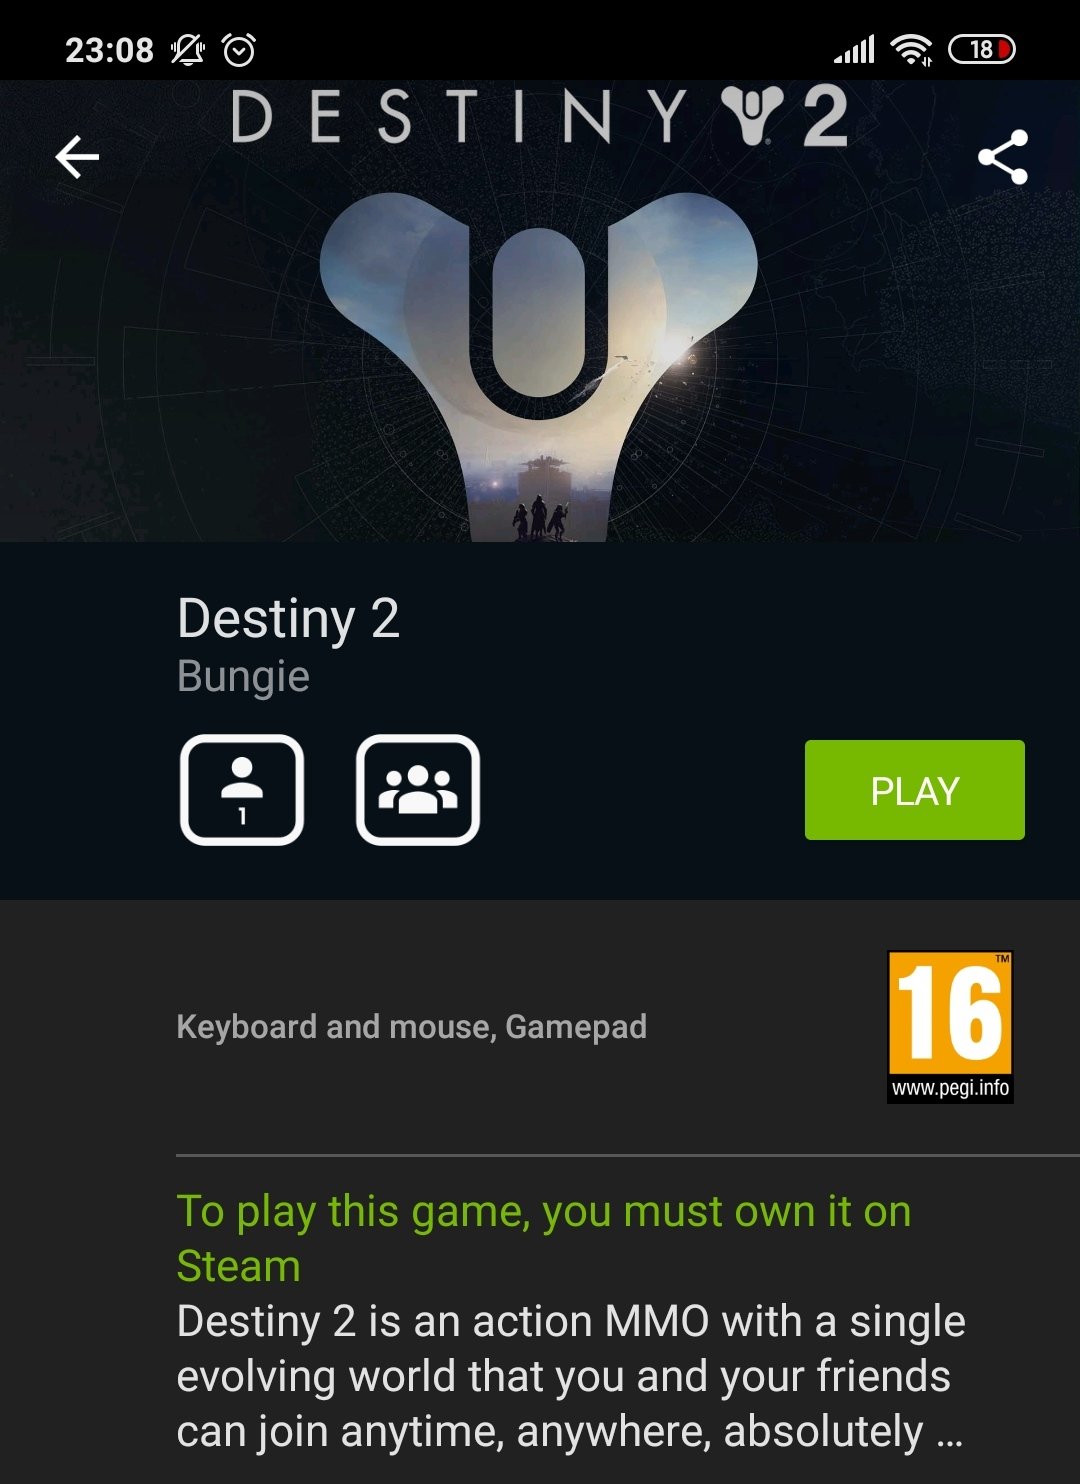 Destiny 2 in GeForce Now